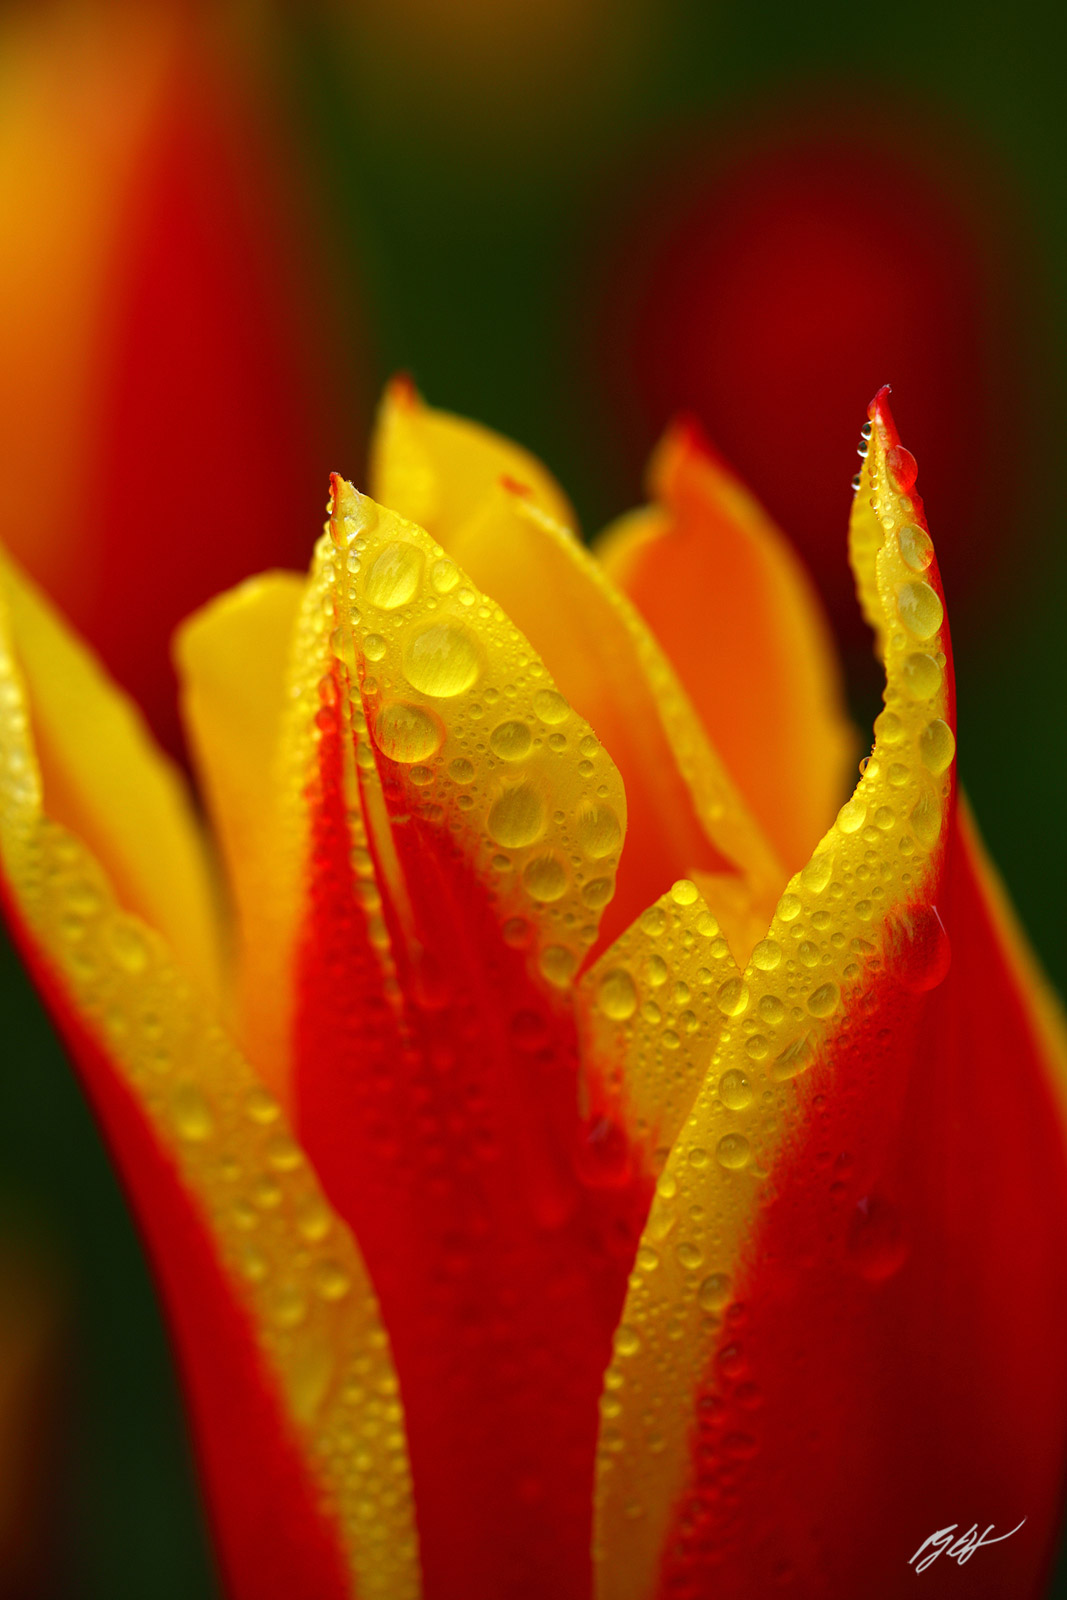 Raindrops on a Tulip in the Roozengaarde Garden in Skagit Valley in Washington